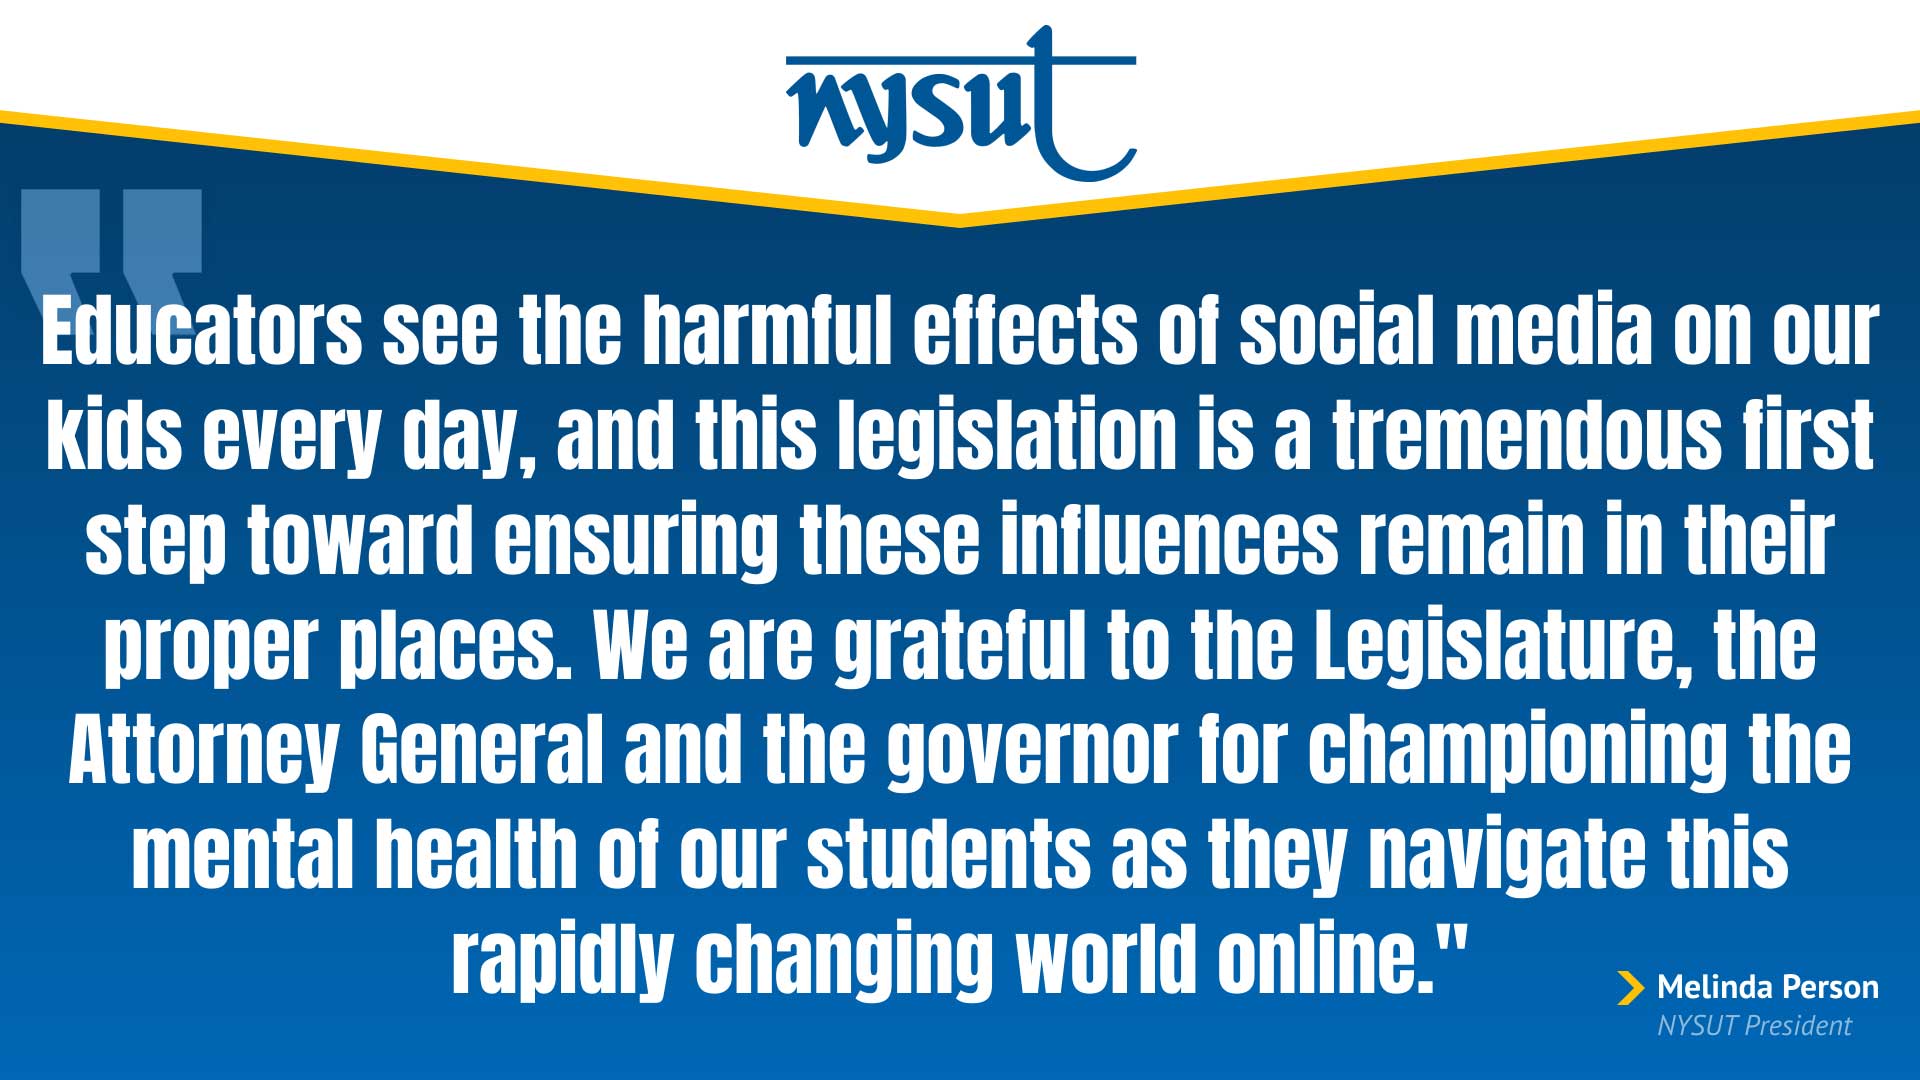 NYSUT statement on legislative passage of social media bills 